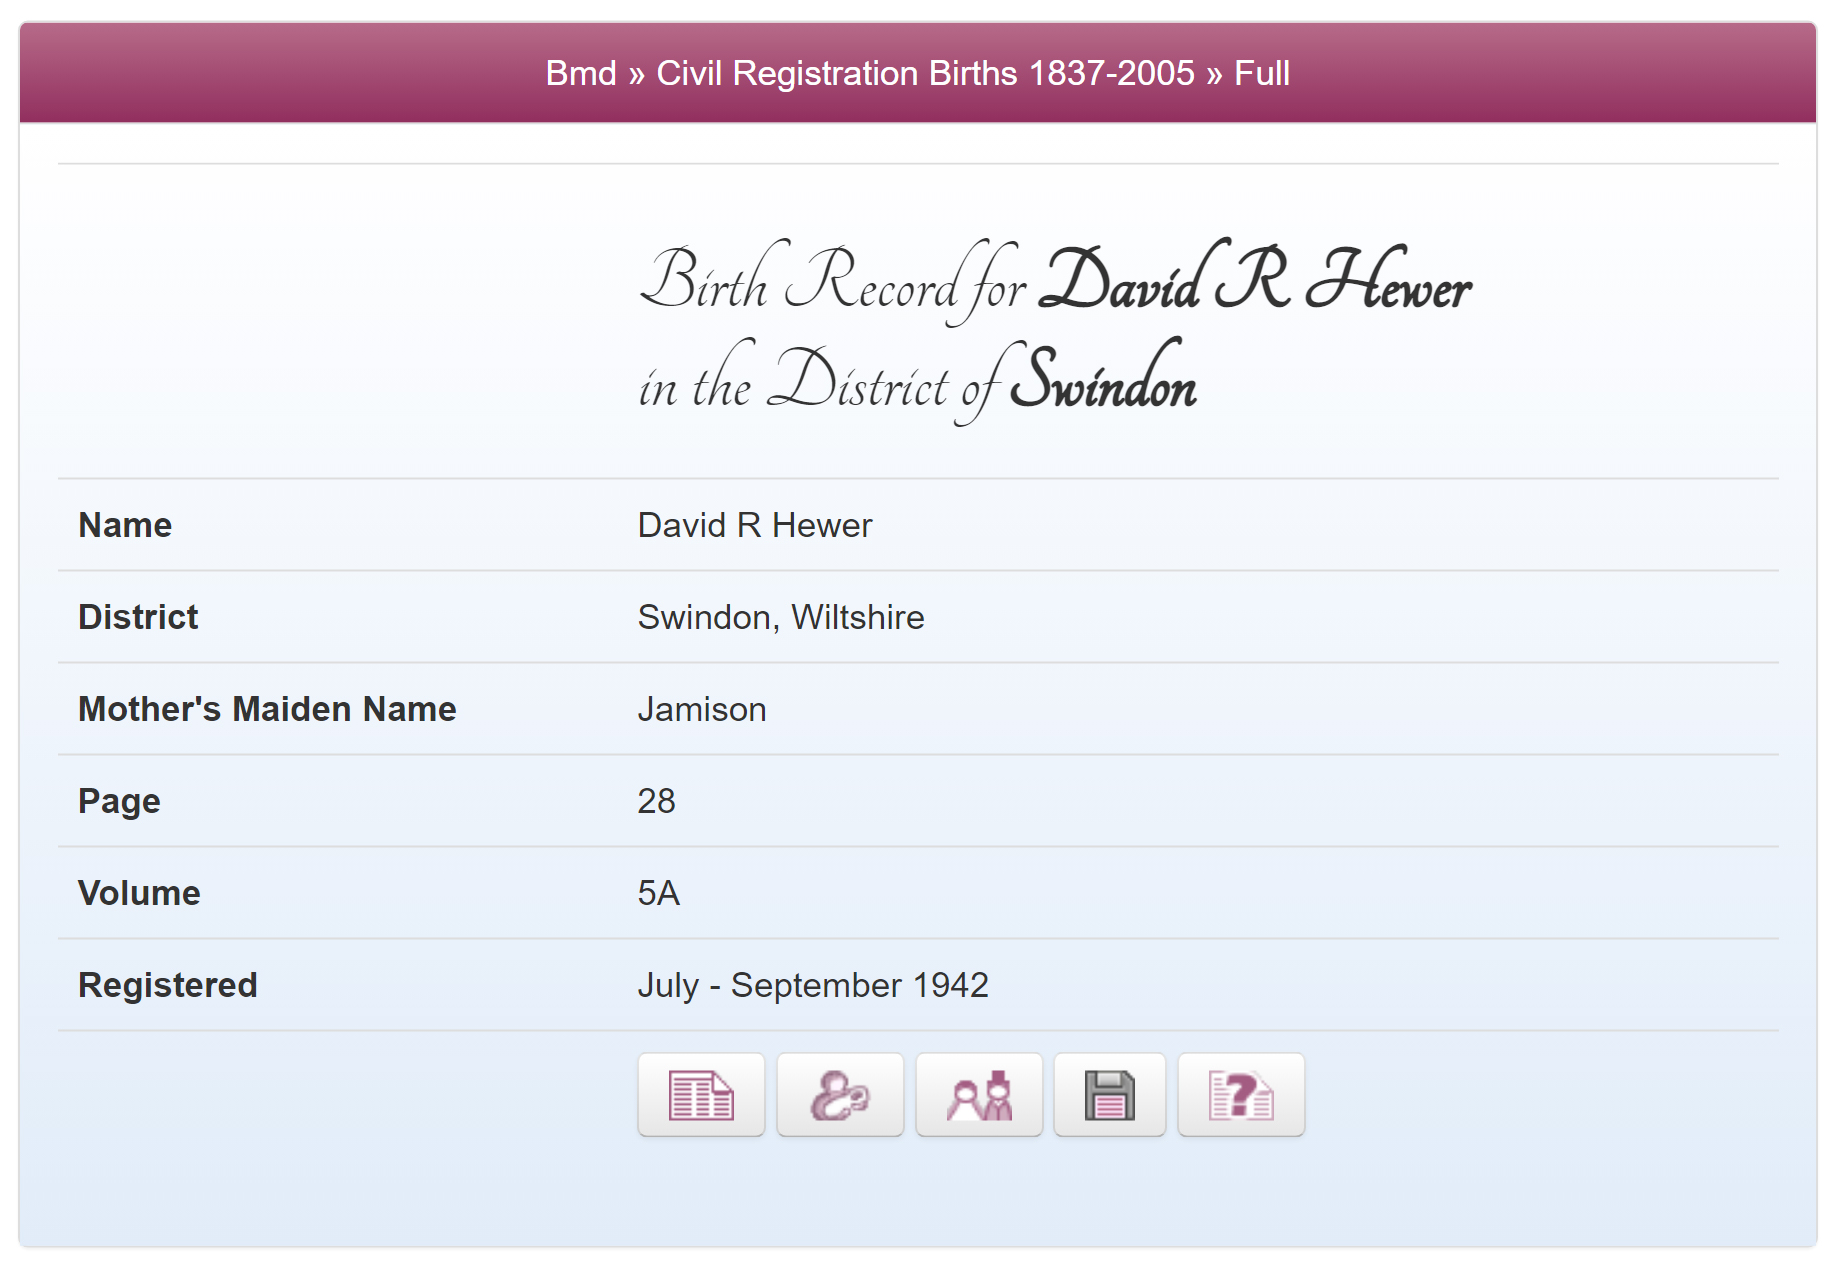 David Hewer's Birth Record